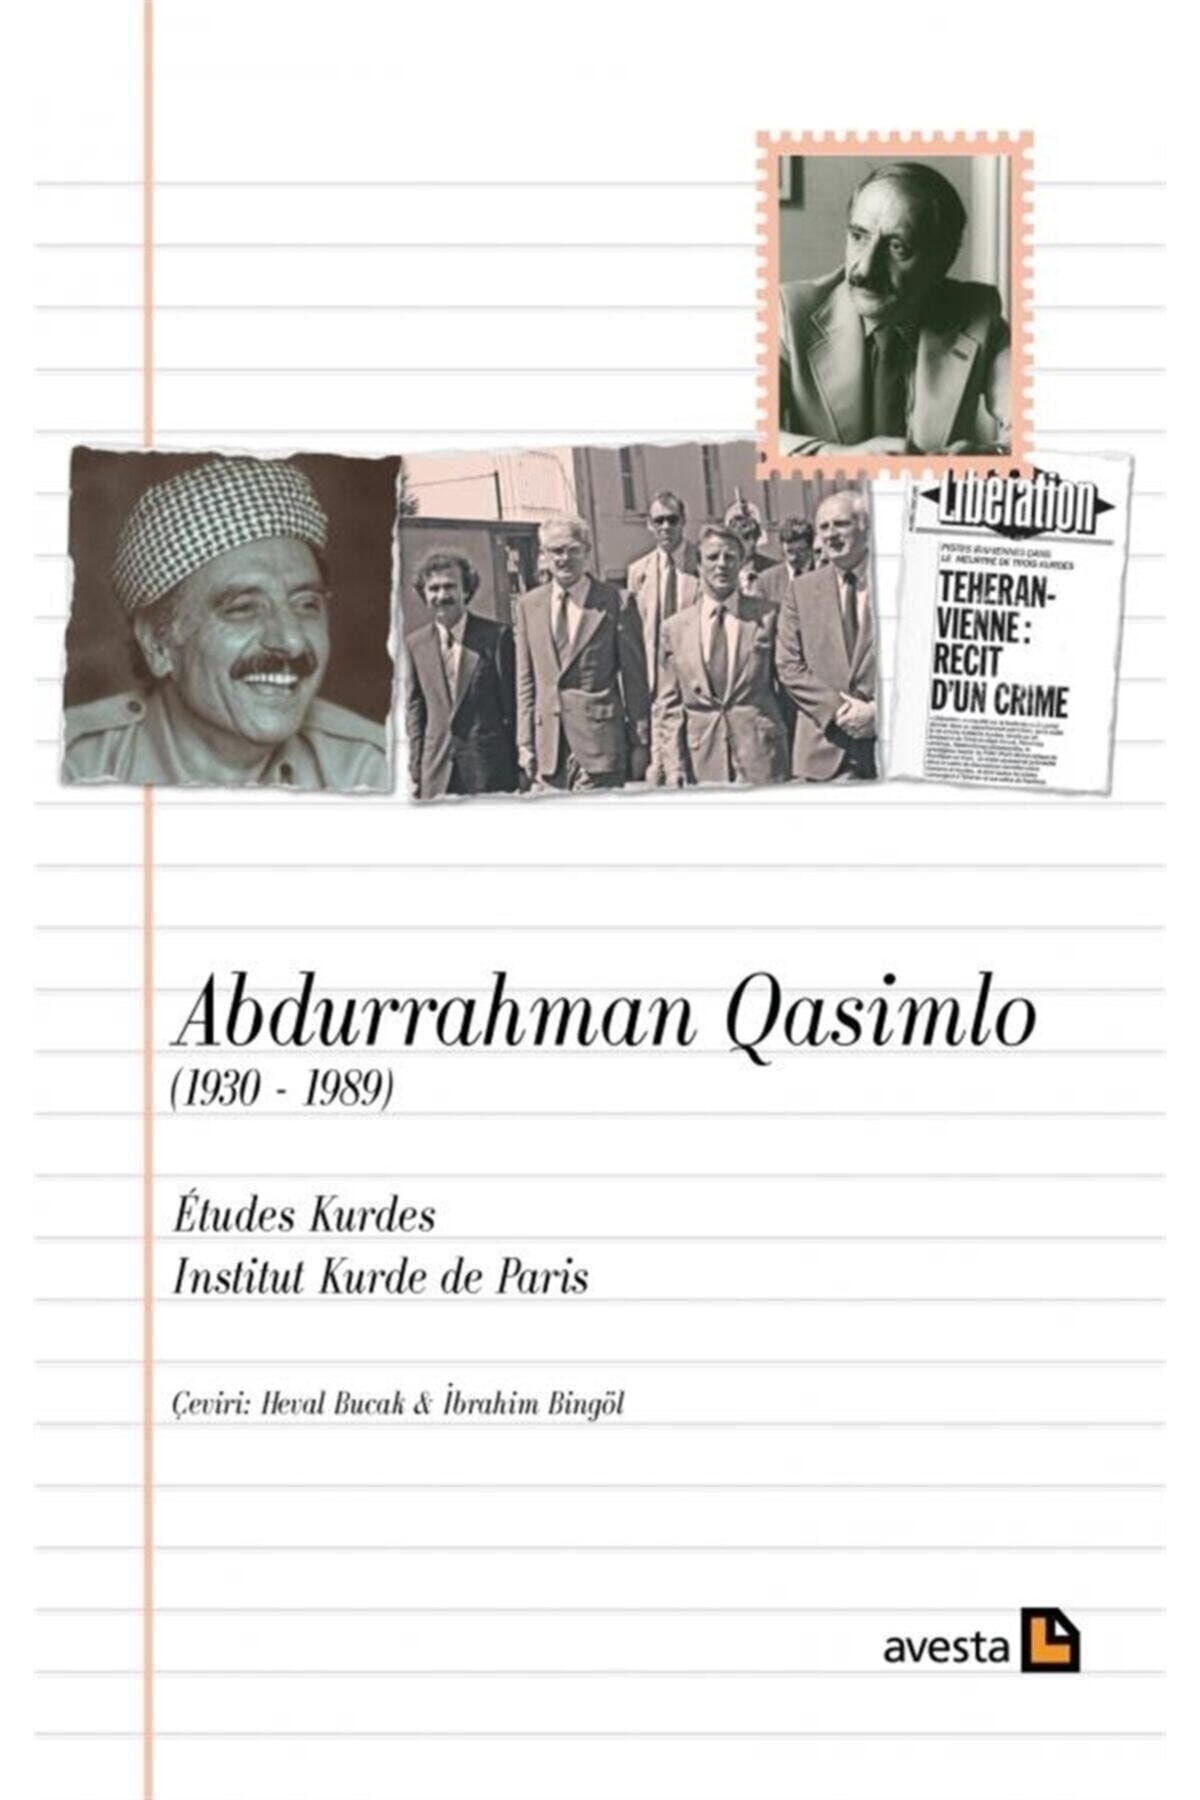 Avesta Yayınları Abdurrahman Qasimlo (1930 - 1989)